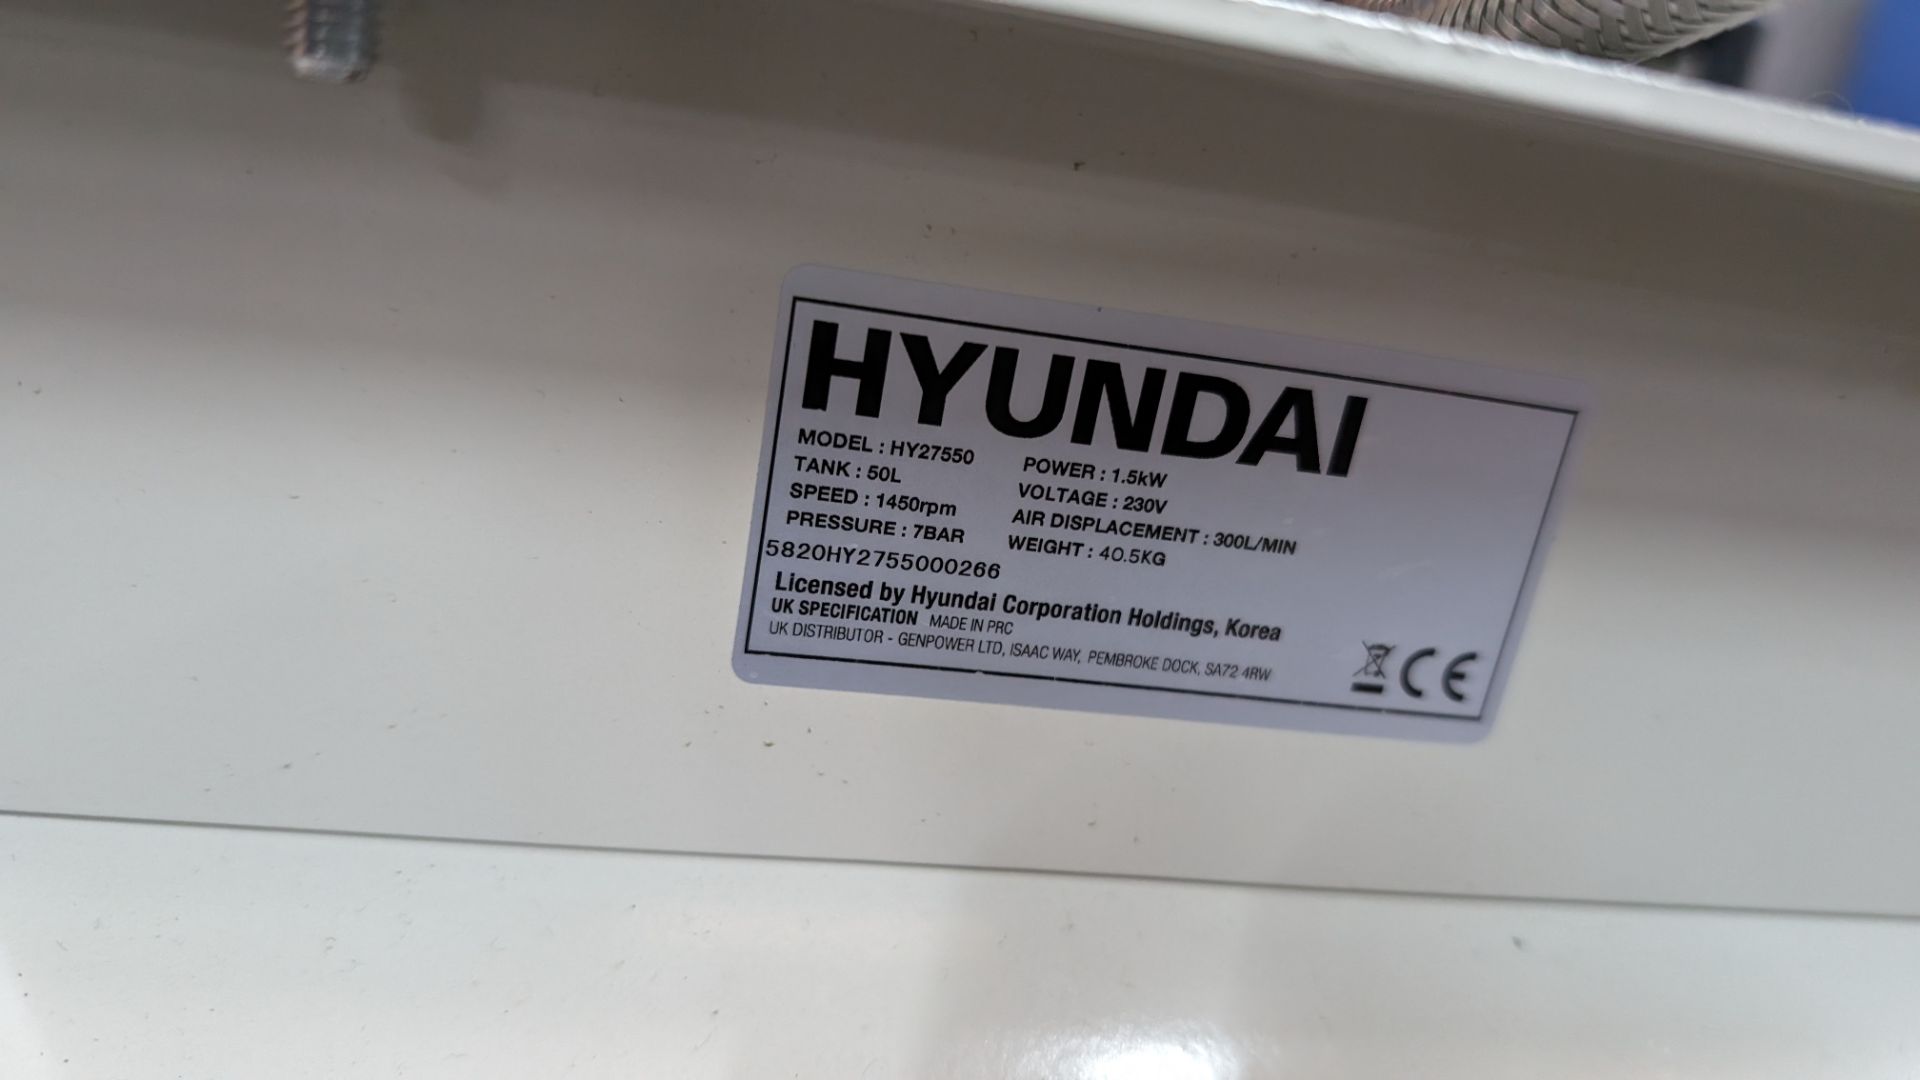 Hyundai super silent oil-free compressor system model HY27550 - Bild 4 aus 11